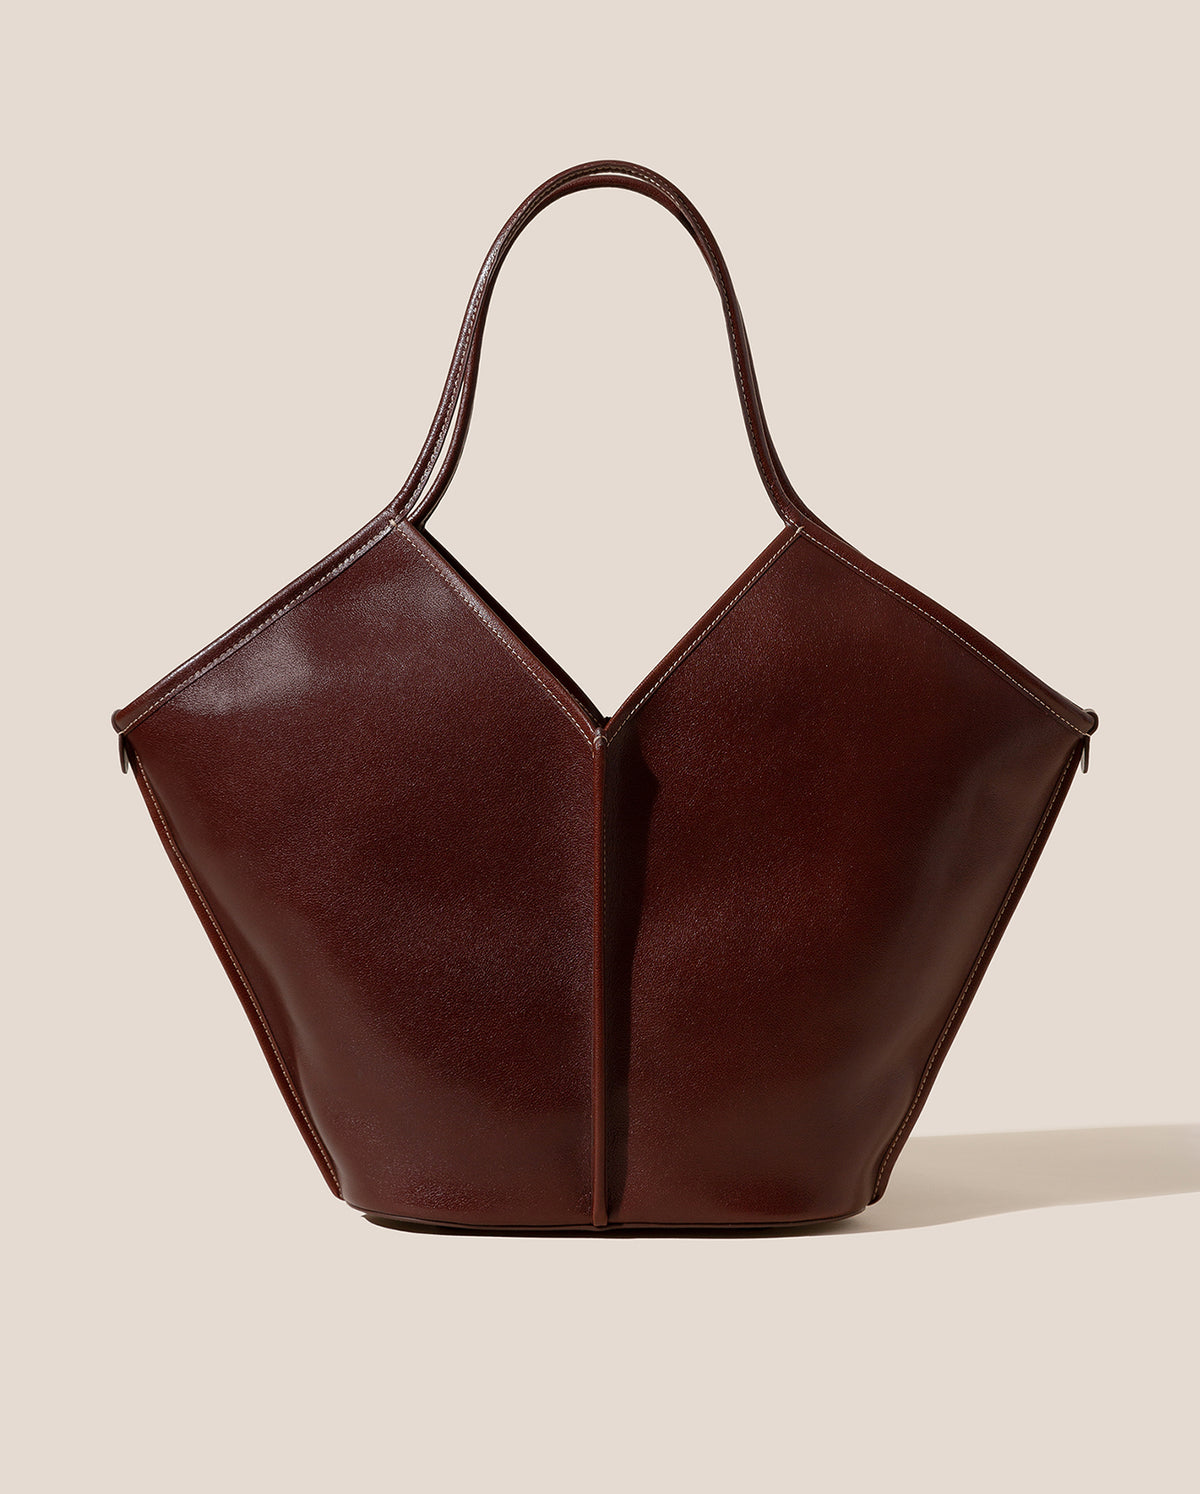 Calella Leather Tote Bag